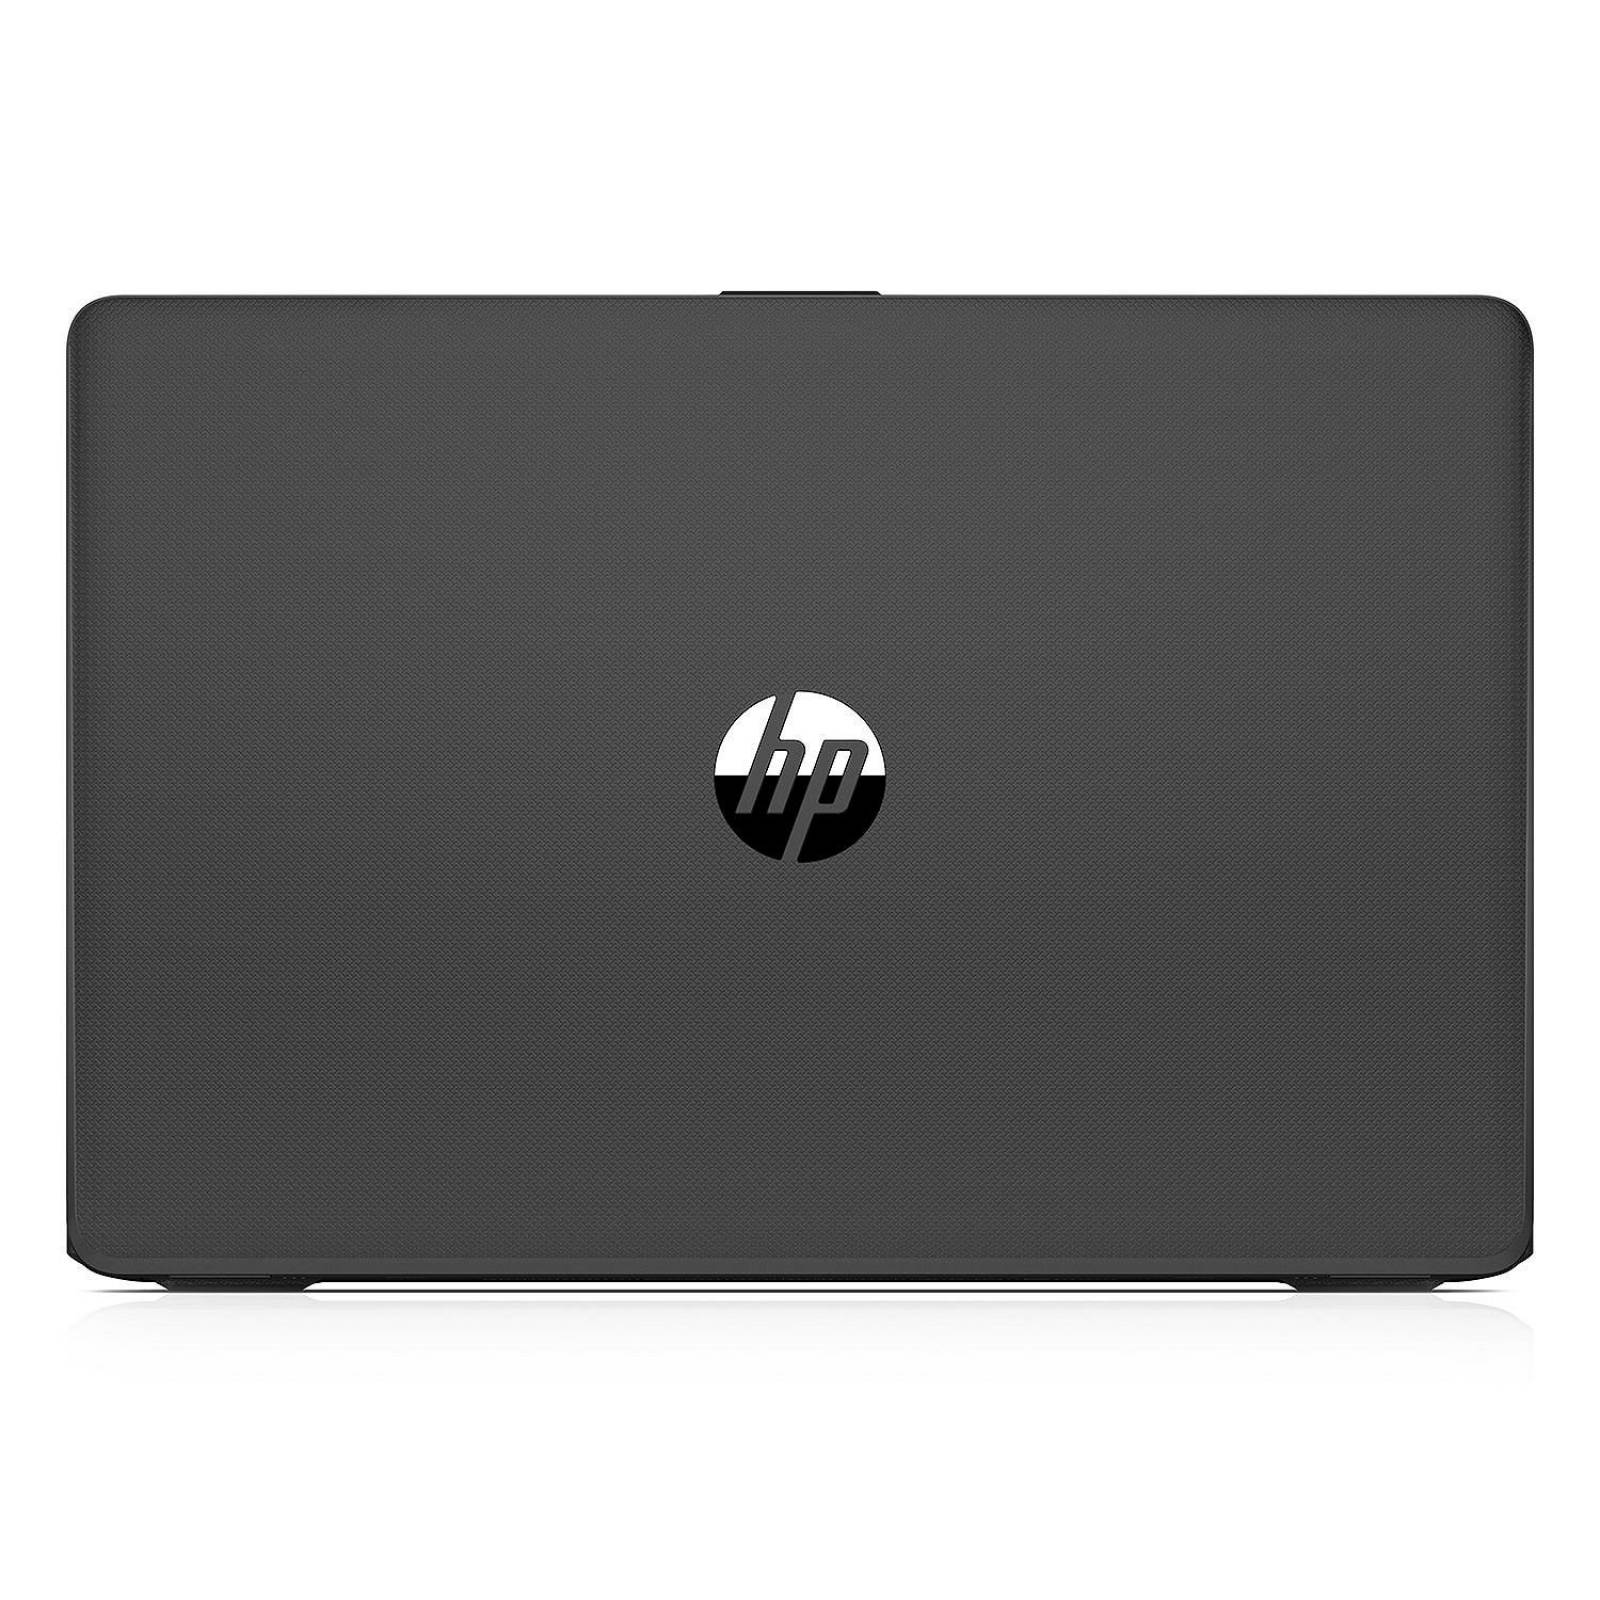 Laptop Hp 2018 15.6 I5-8250u 8gb 2tb Drive Optico Windows 10